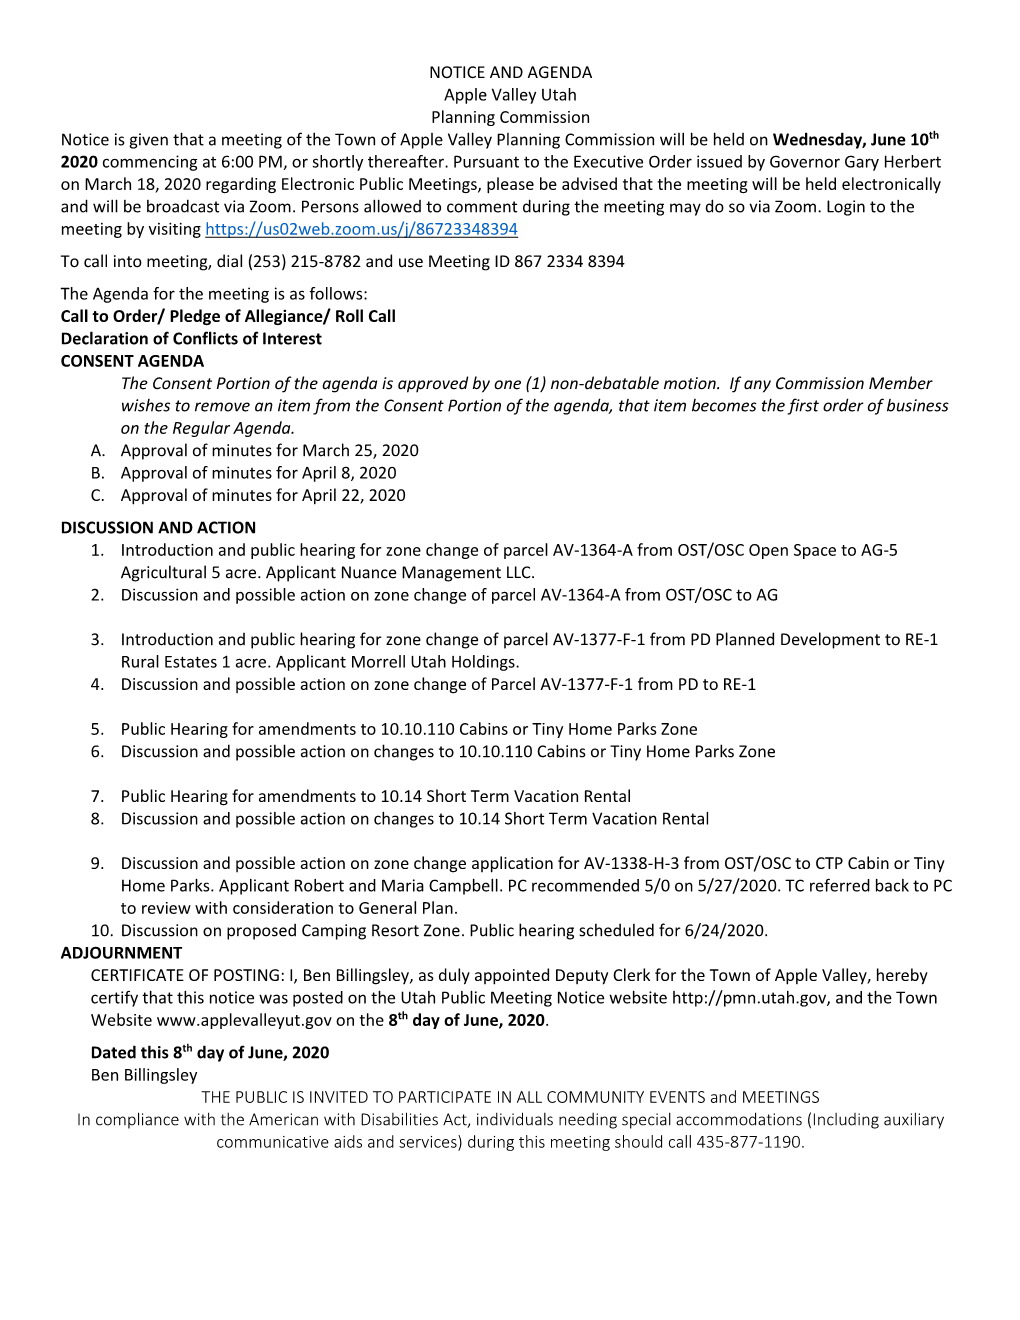 NOTICE and AGENDA Apple Valley Utah Planning Commission Notice